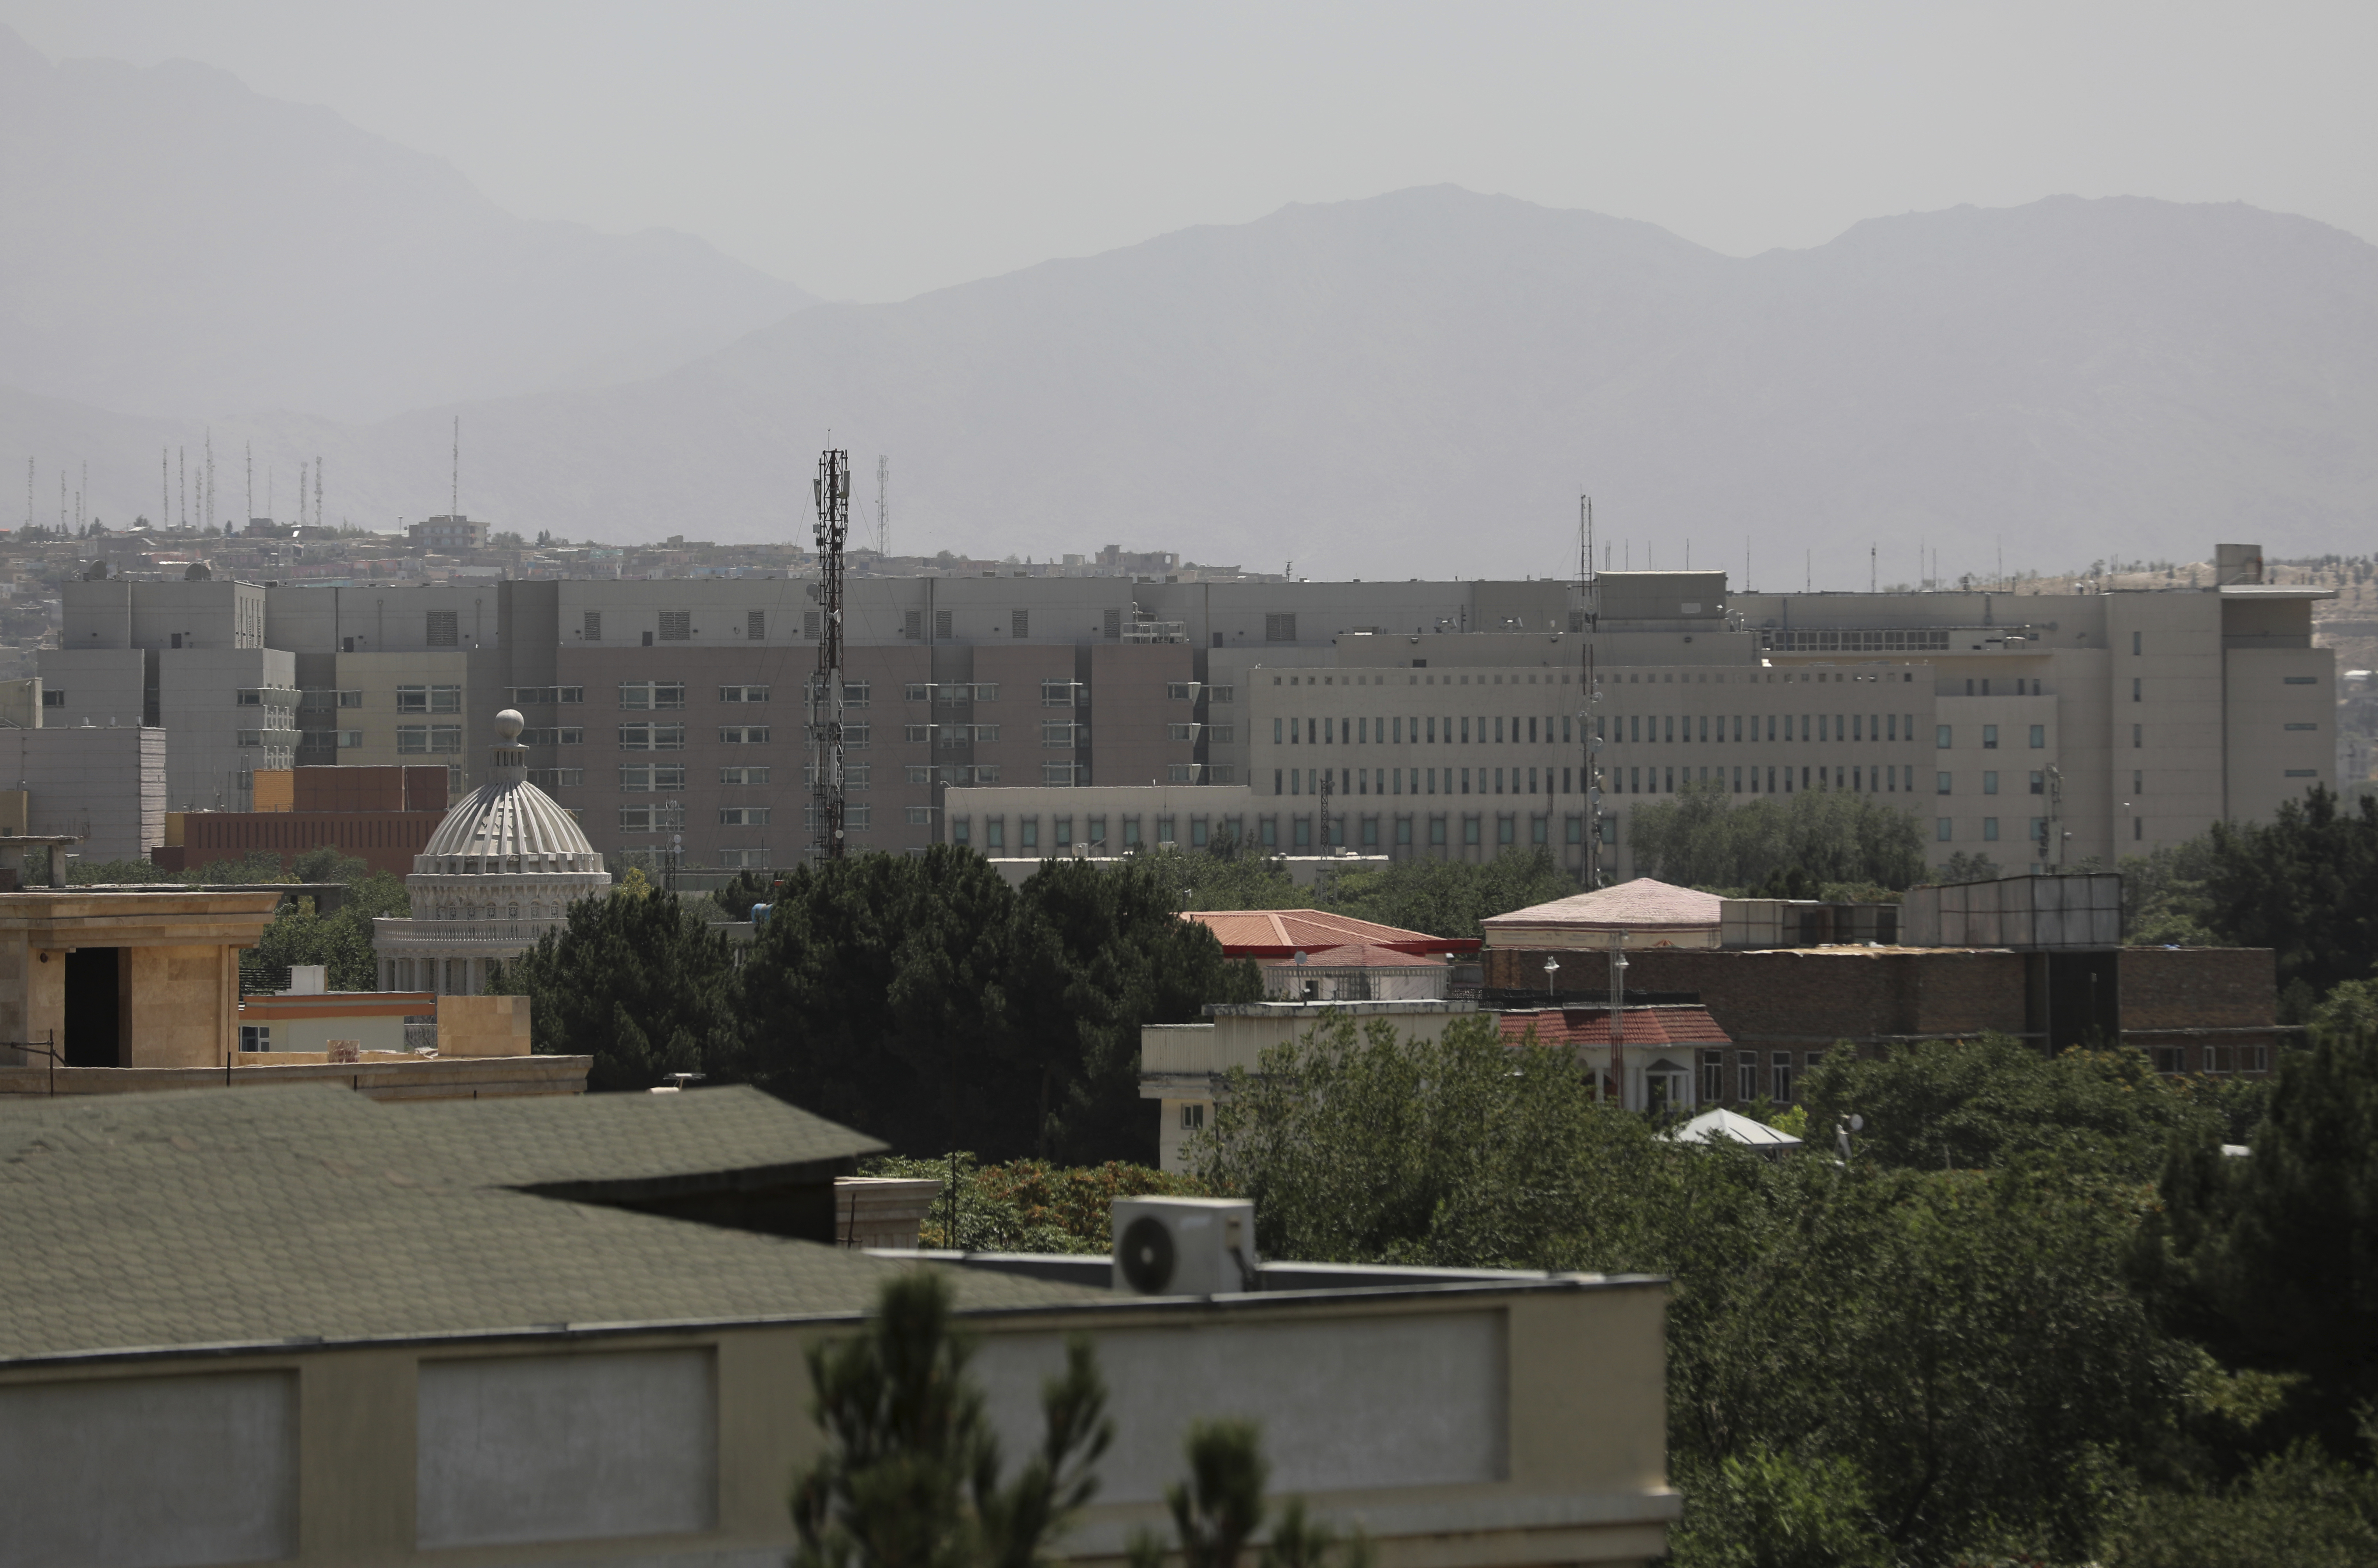 The US embassy buildings in Kabul, Afghanistan